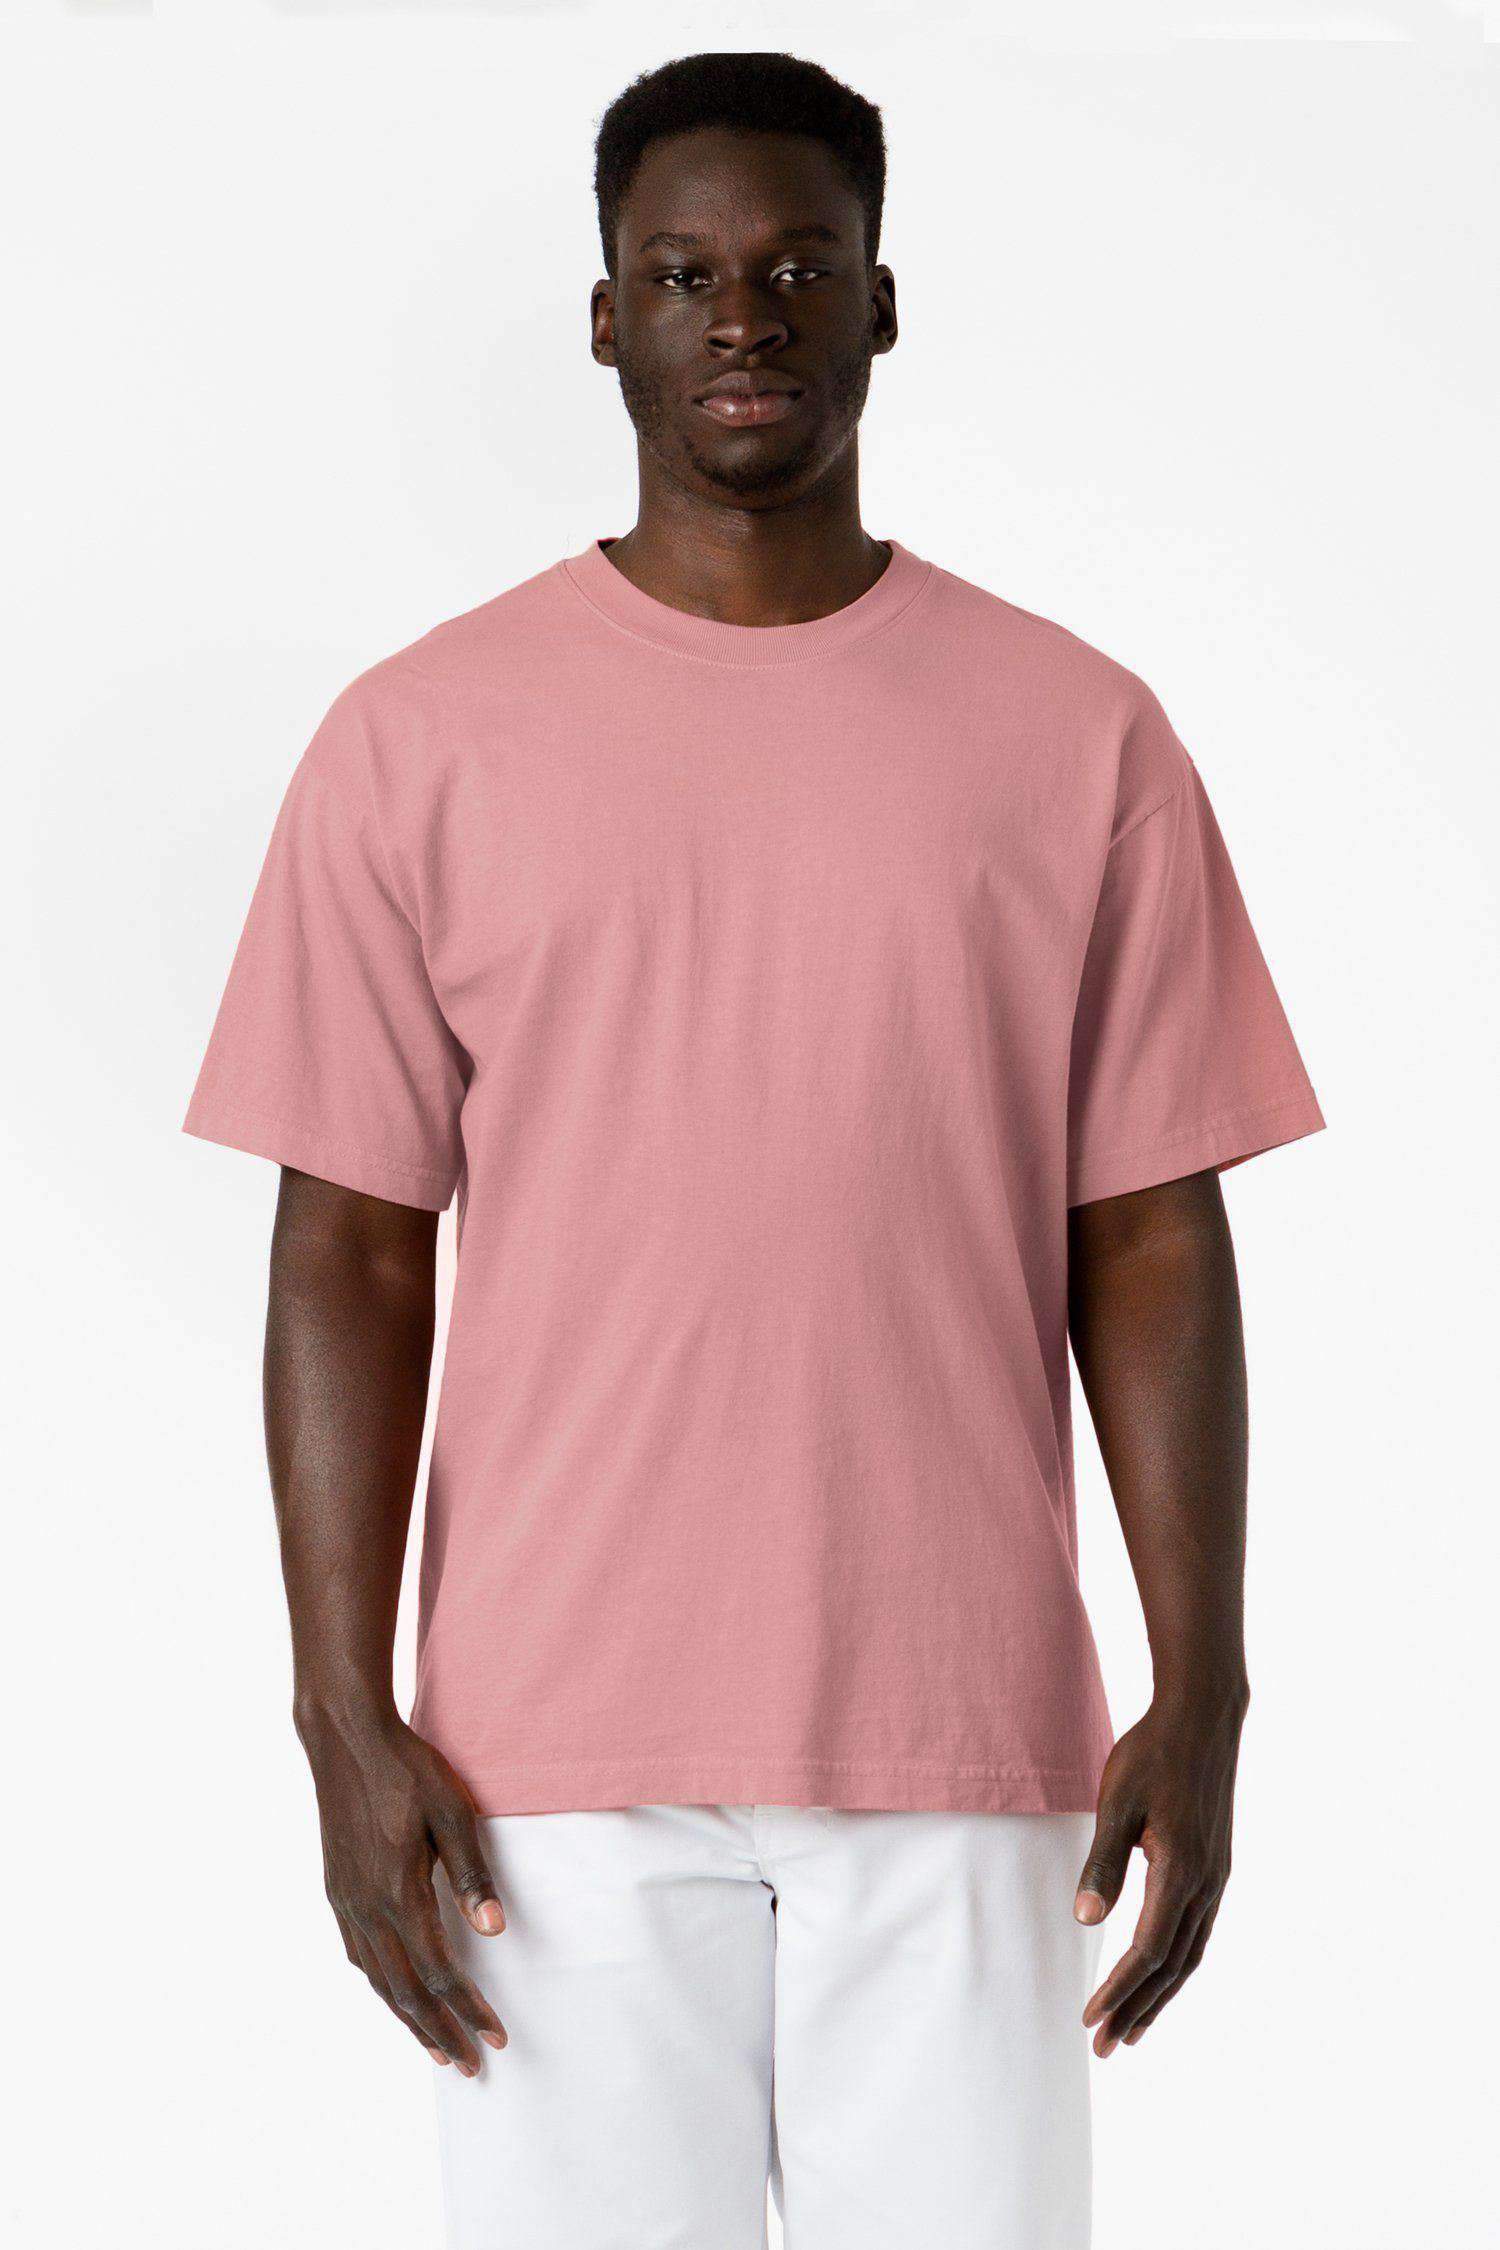 1801GD - 6.5oz Garment Dye Pastel Crew Neck T-Shirt T-Shirt Los Angeles Apparel Coral S 